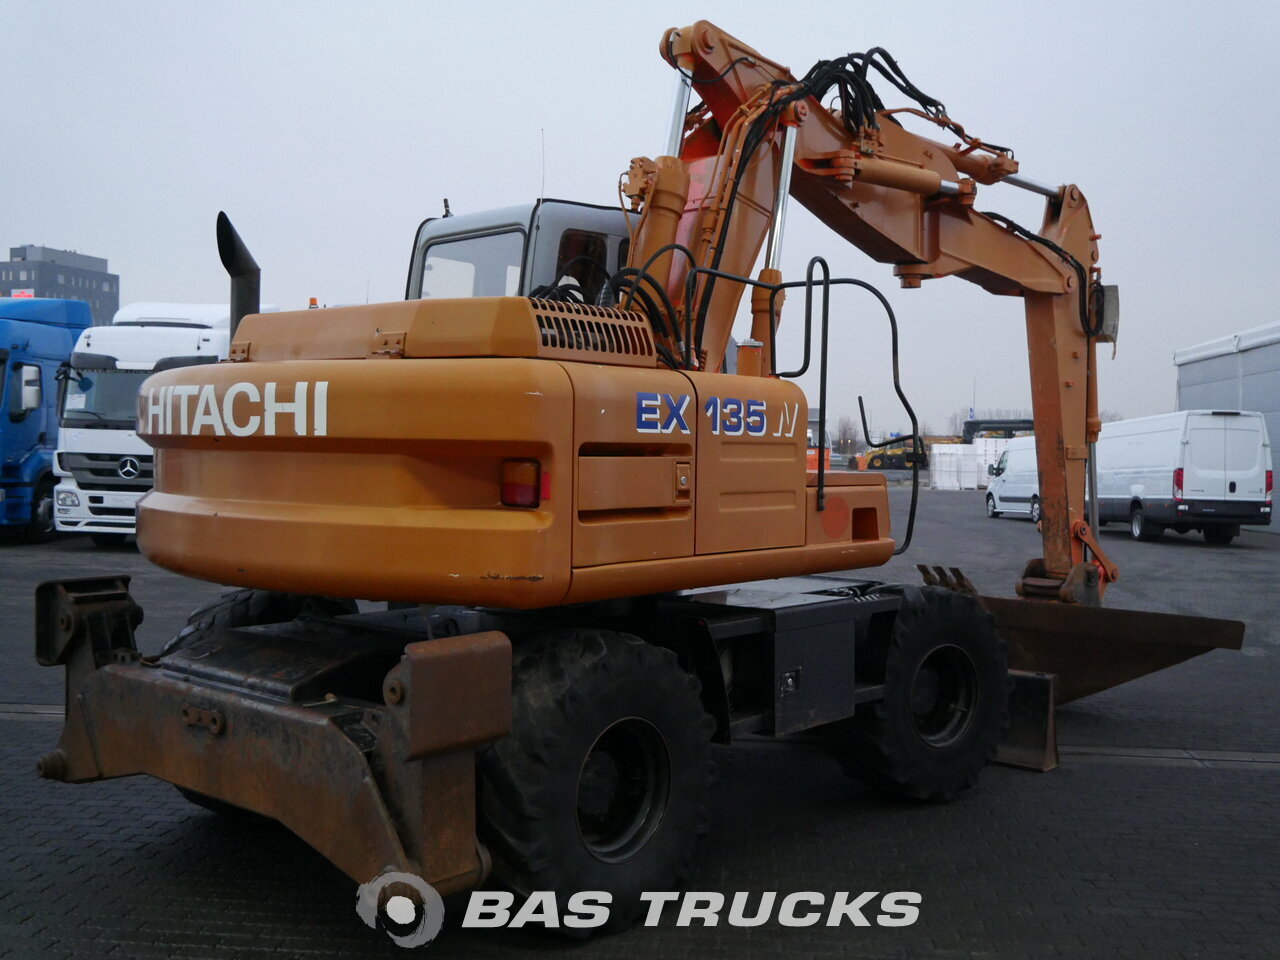 Hitachi EX 135 W Construction equipment Euro norm 0 €17950 - BAS Trucks